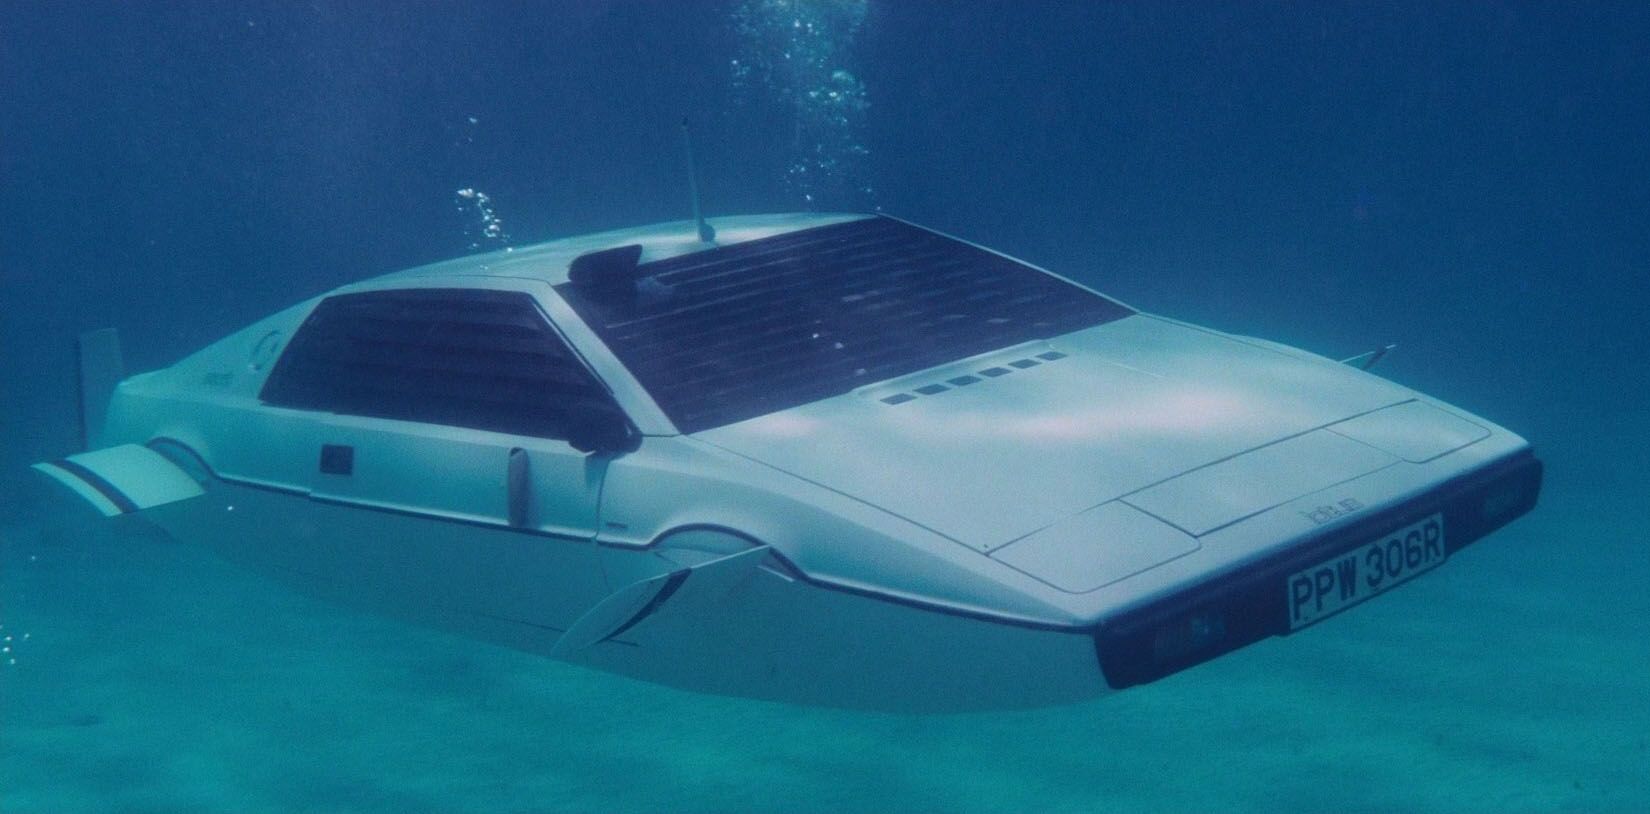 1976 Lotus Esprit Series I under water